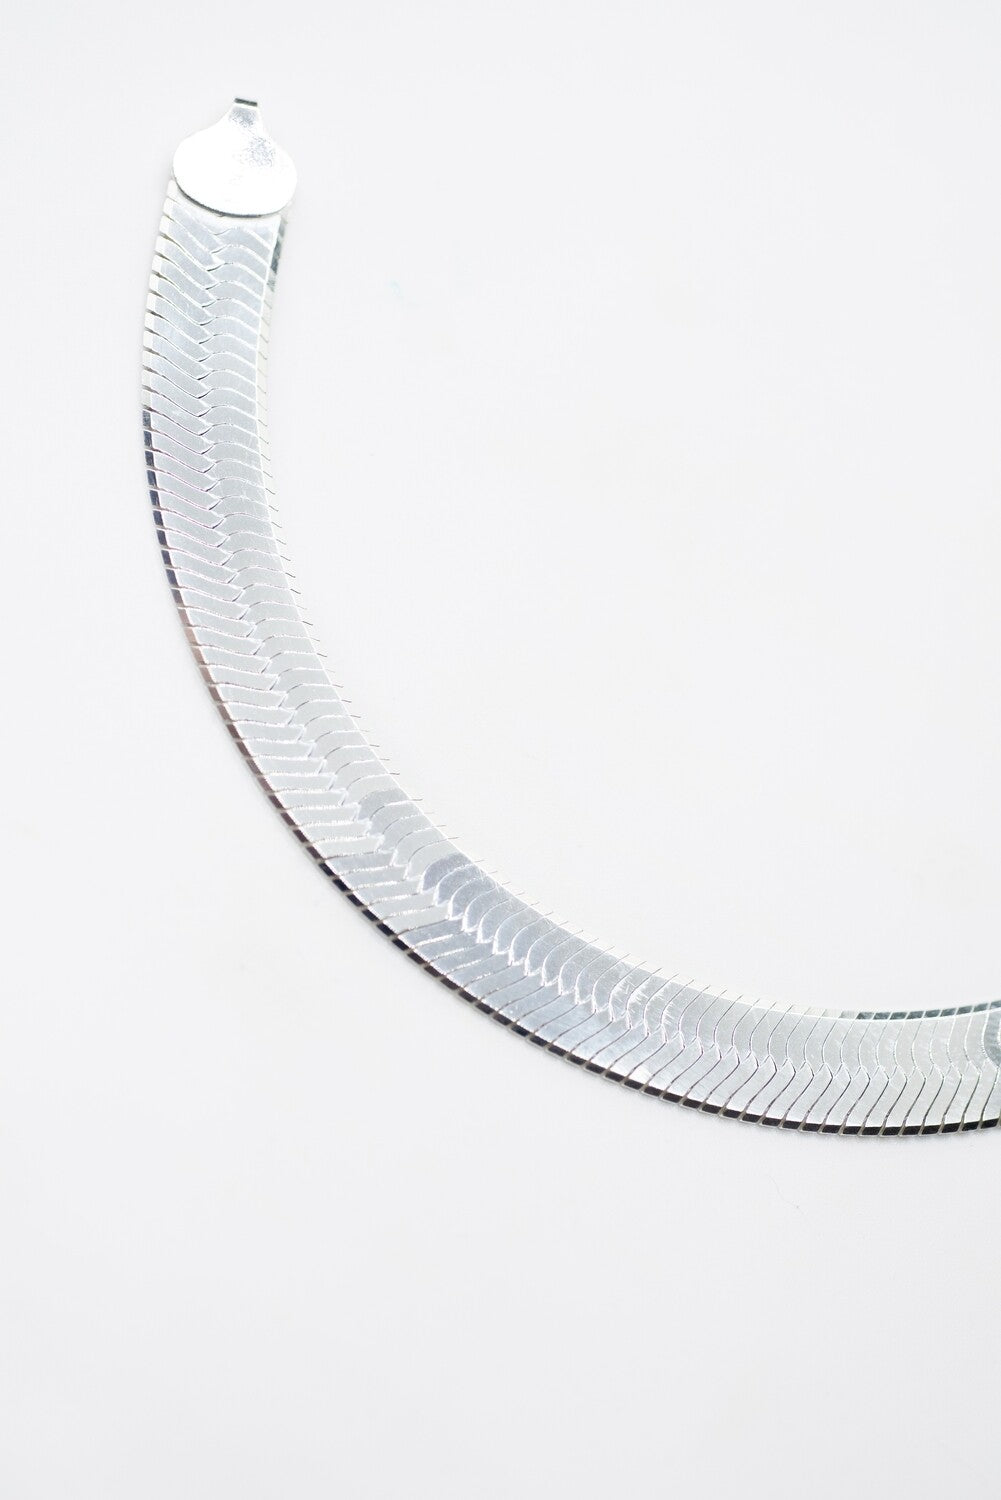 10mm Herringbone Necklace – Sterling Silver